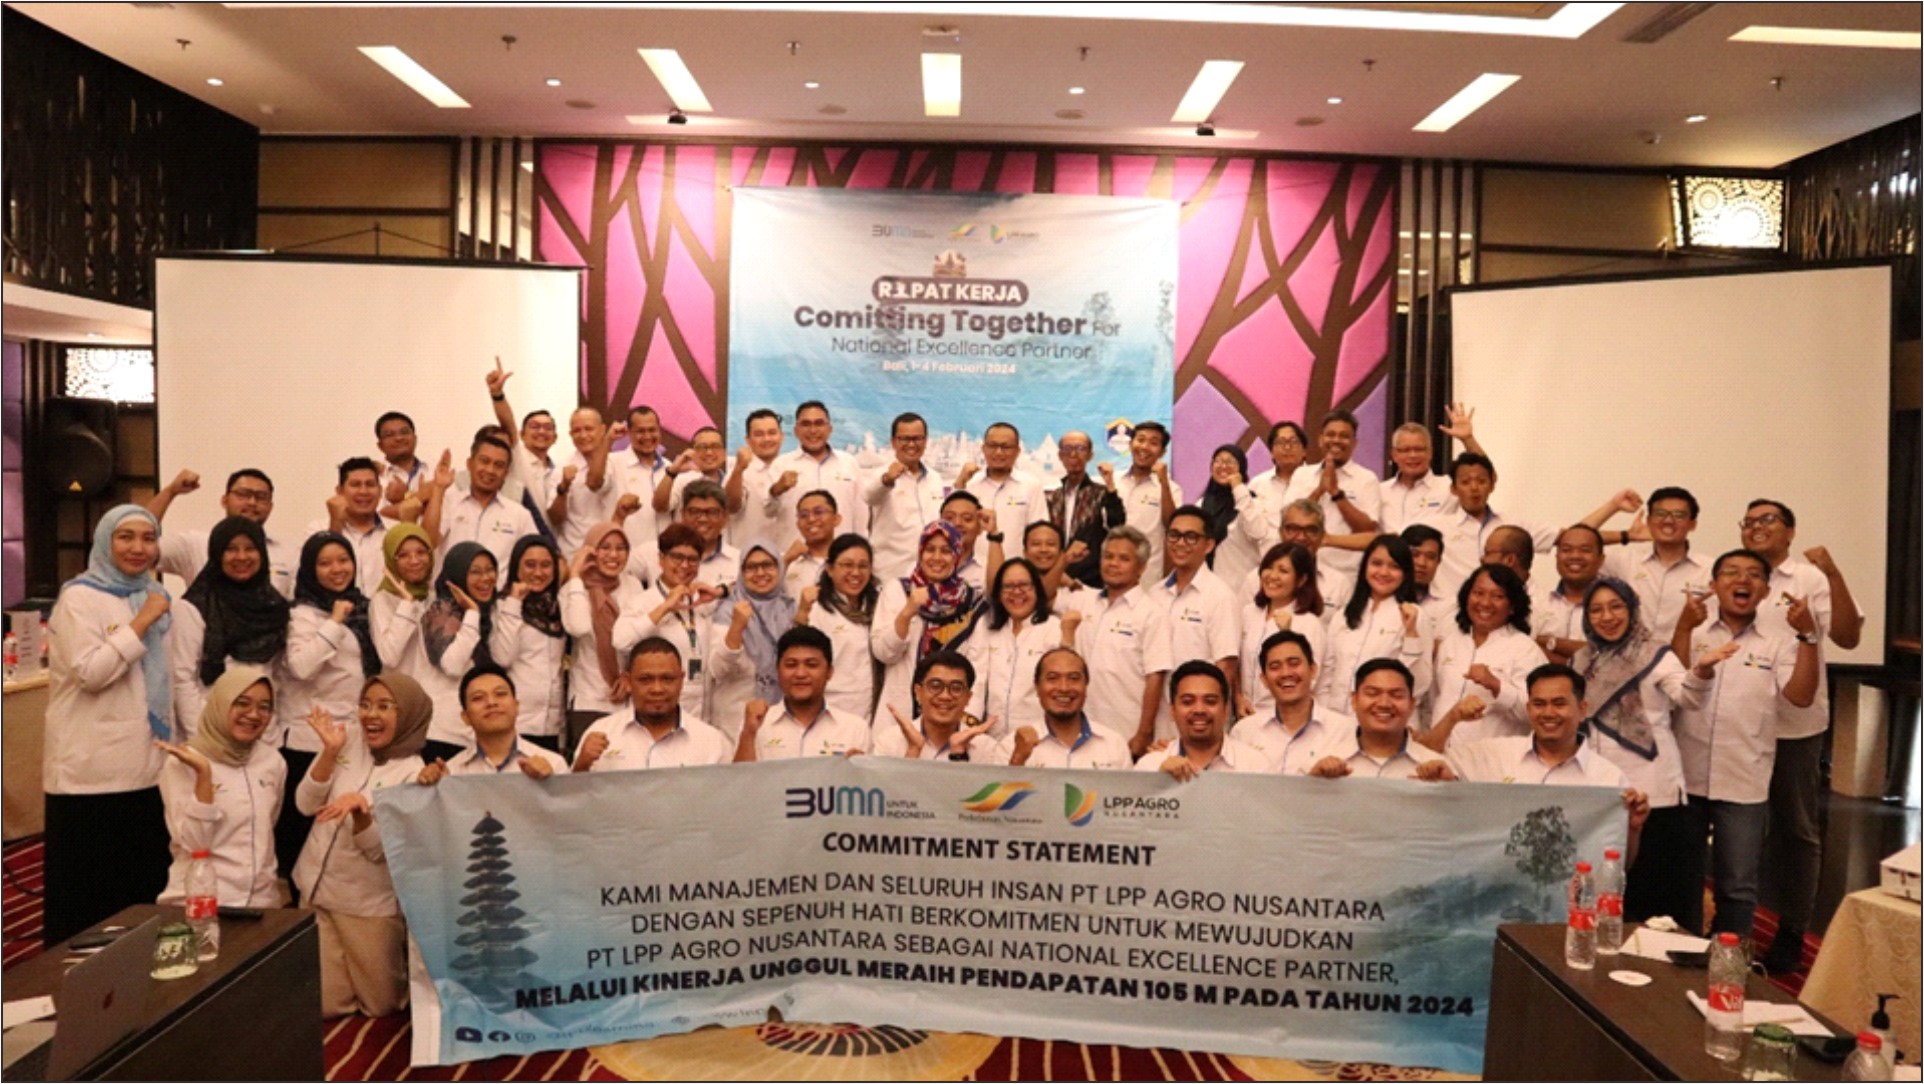 PT LPP Agro Nusantara: Comitting Together For National Excellence Partner